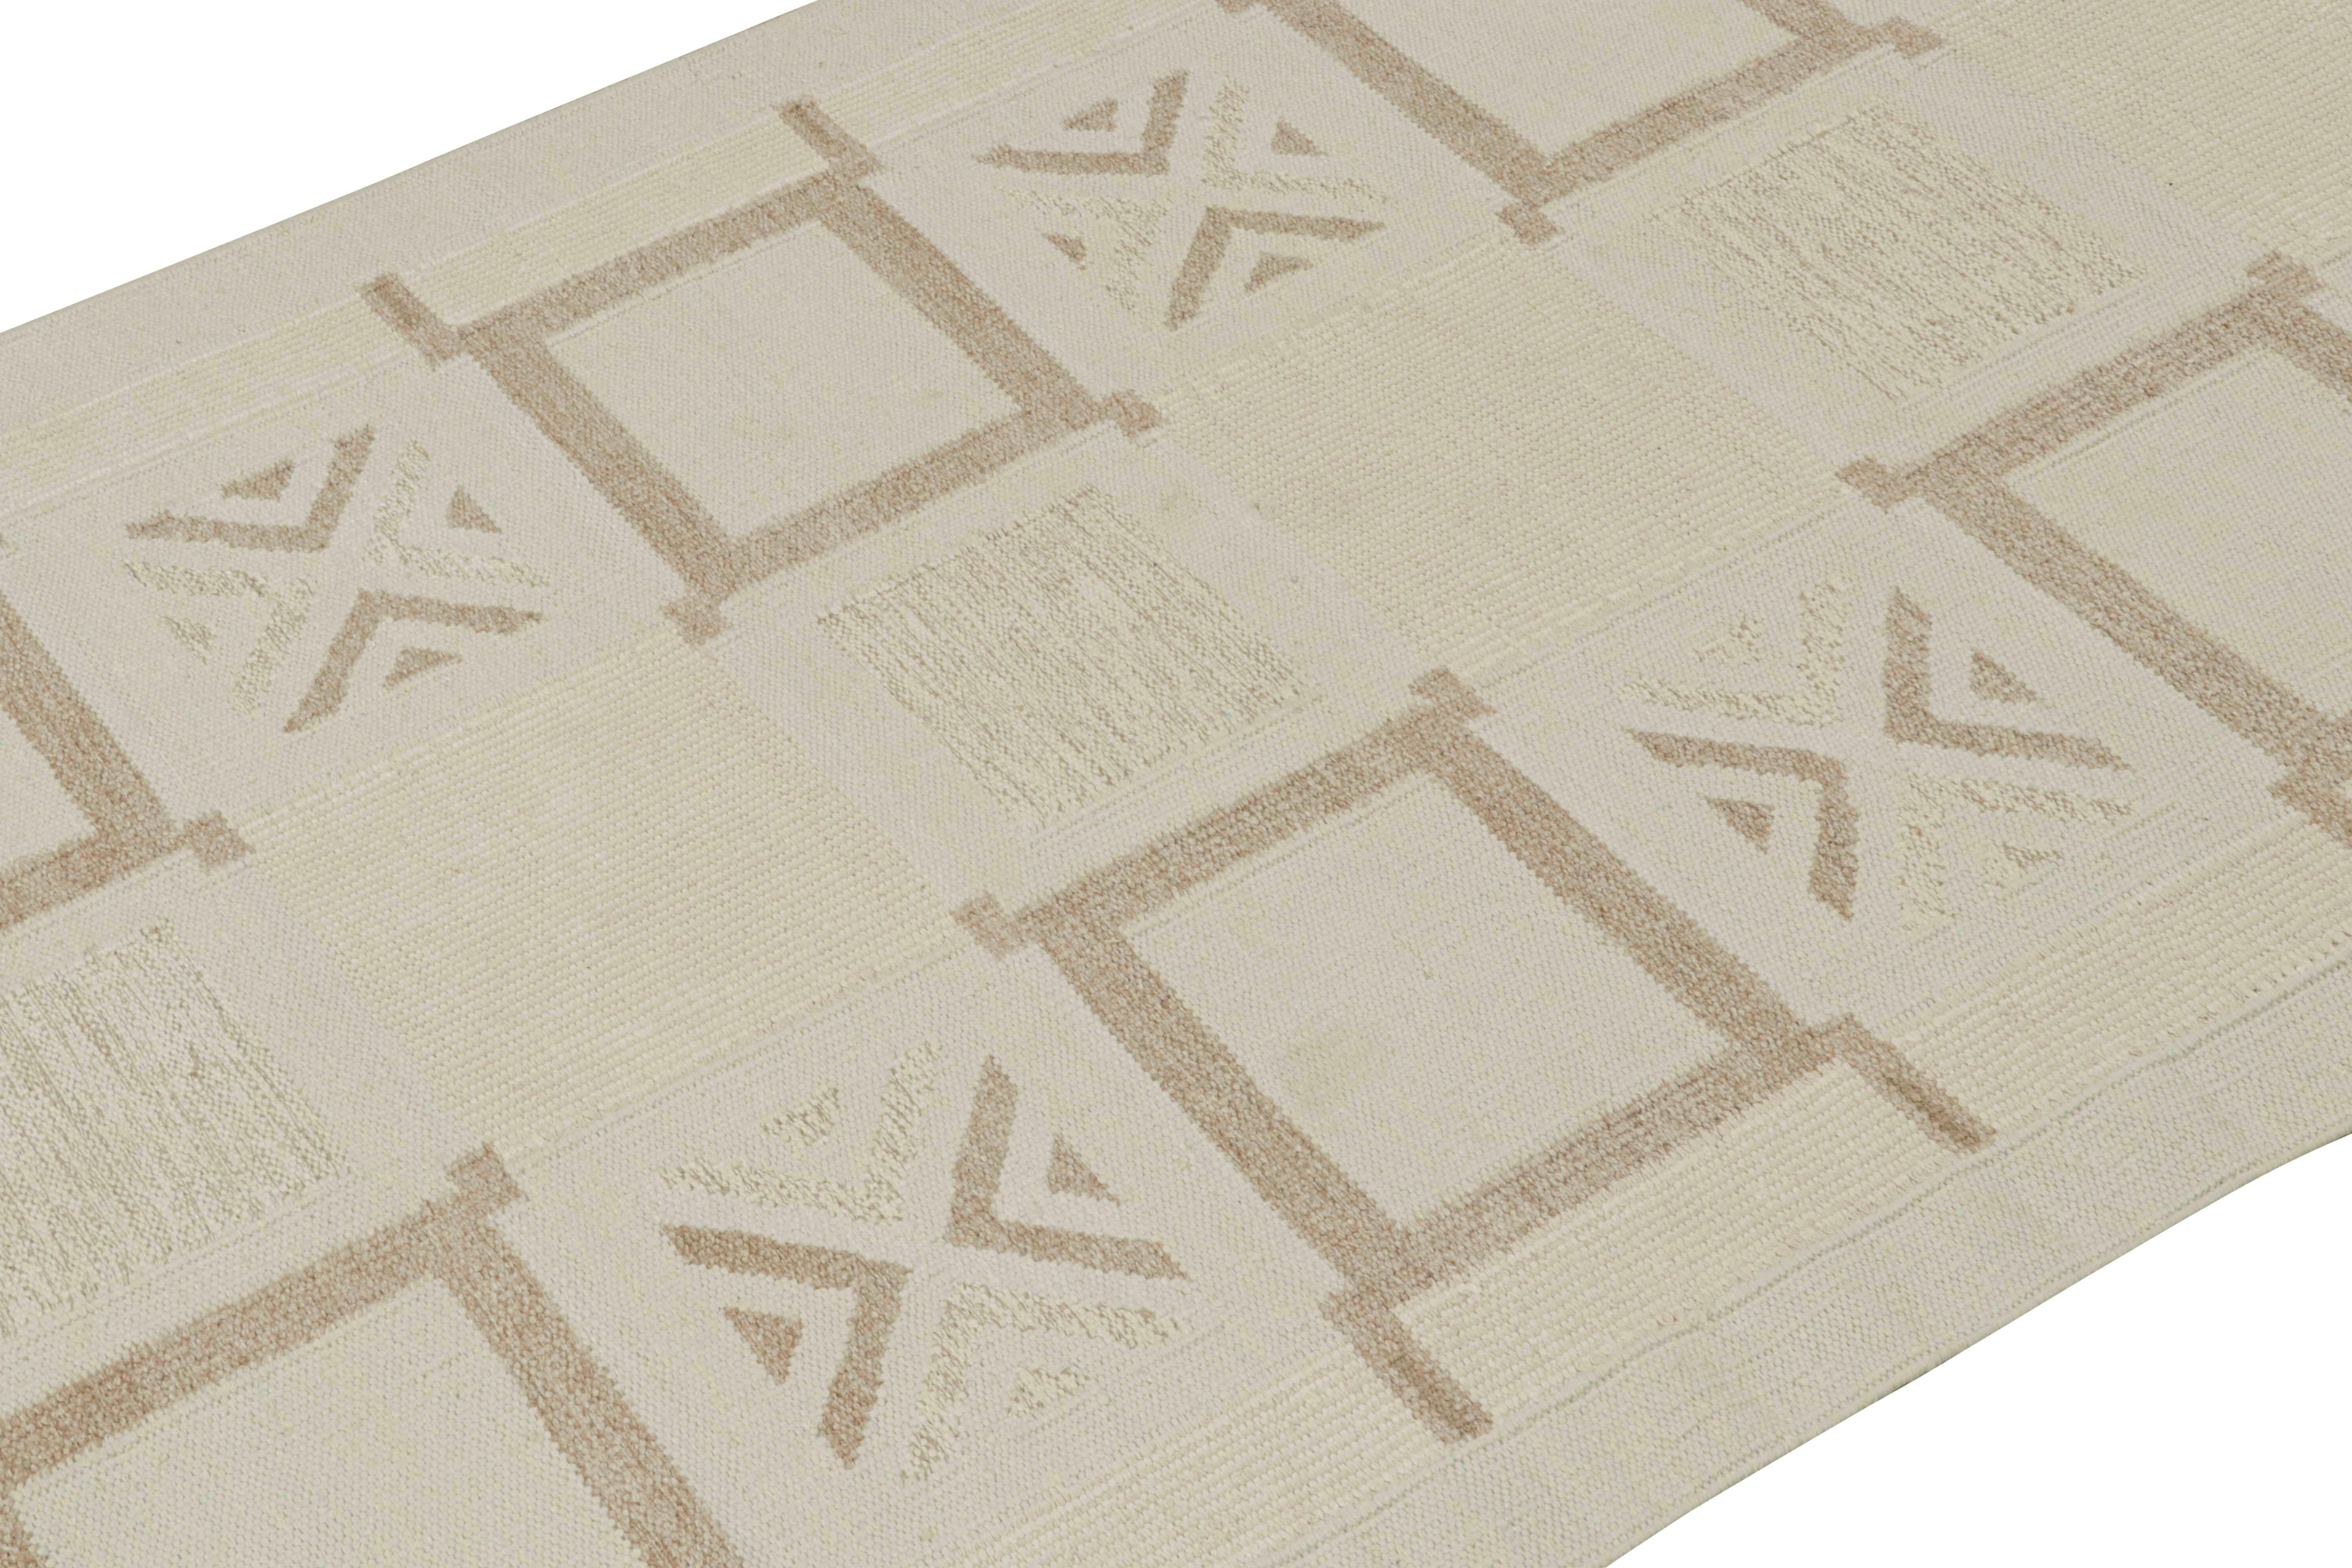 Indian Rug & Kilim’s Scandinavian style Kilim in White & Beige-Brown Geometric Patterns For Sale